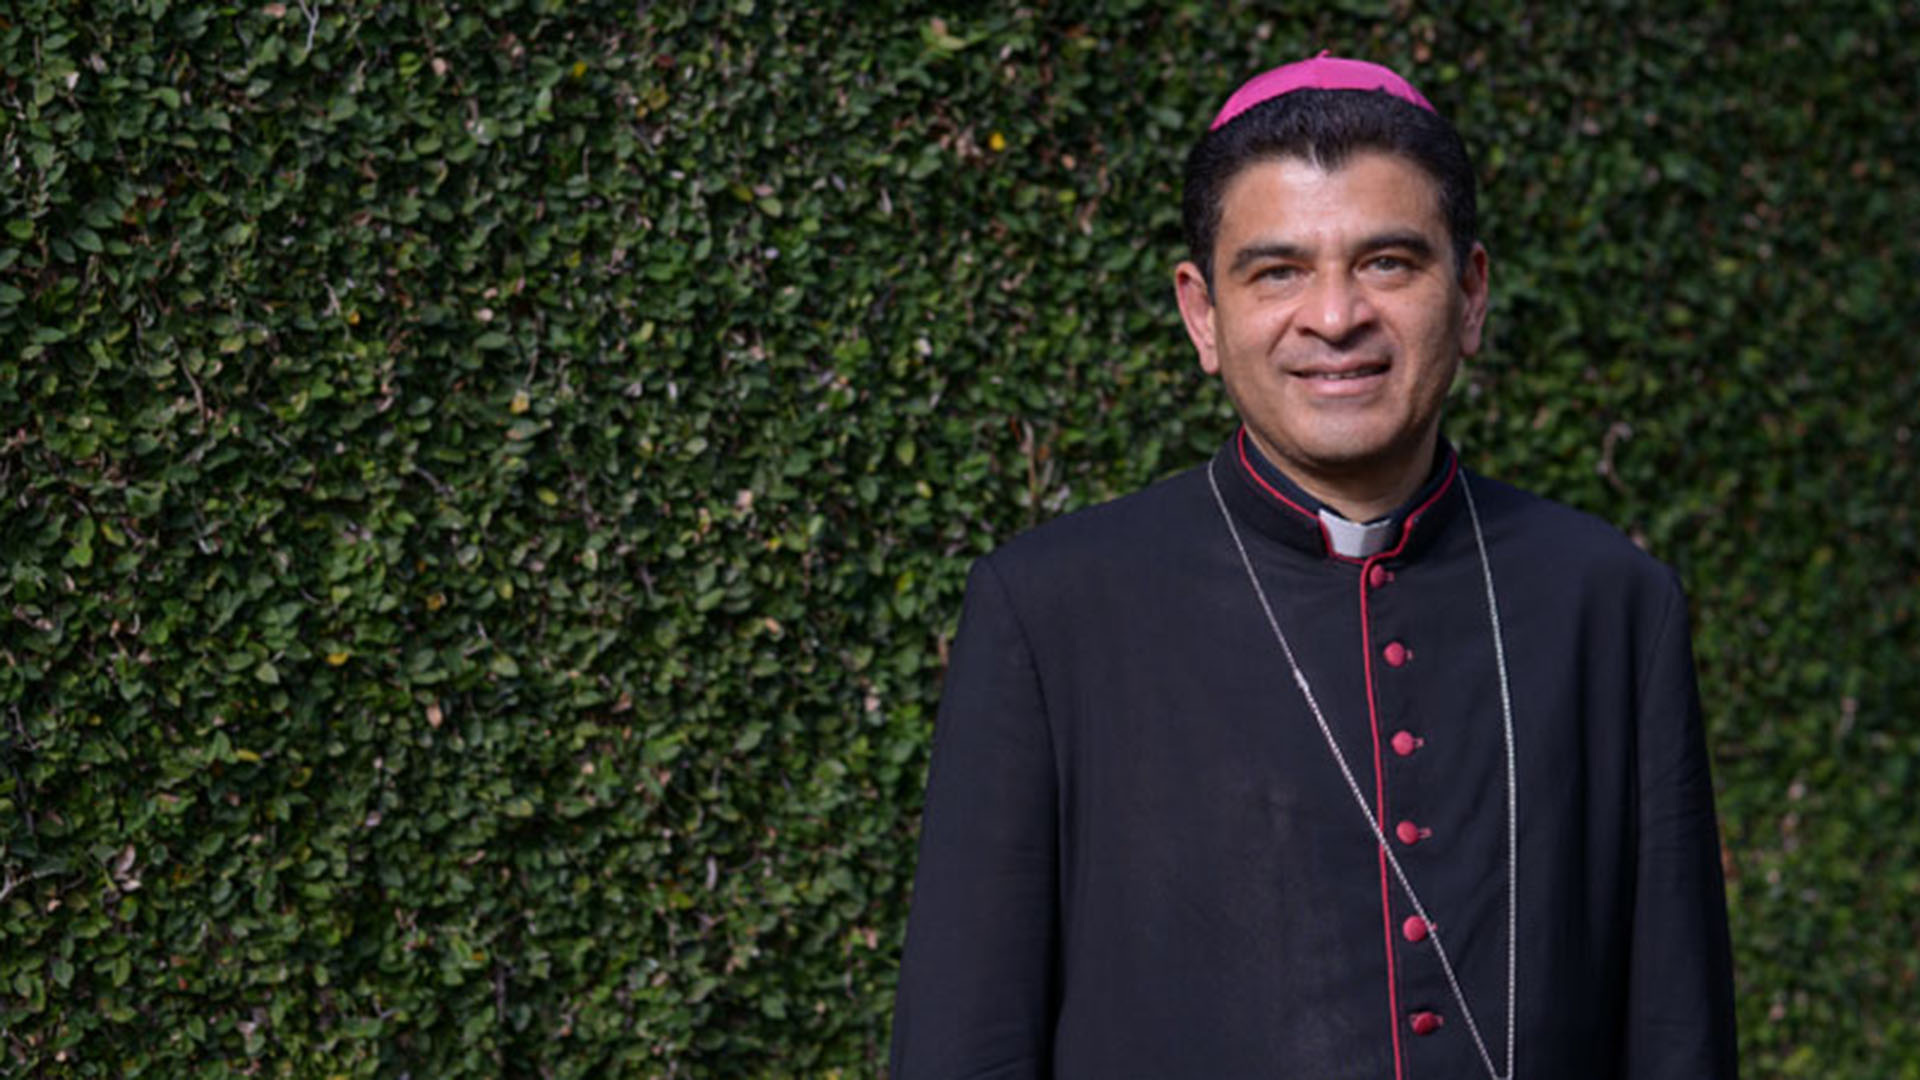 Obispos de Costa Rica expresan su dolor por obispo Monseñor Rolando Álvarez detenido en Nicaragua